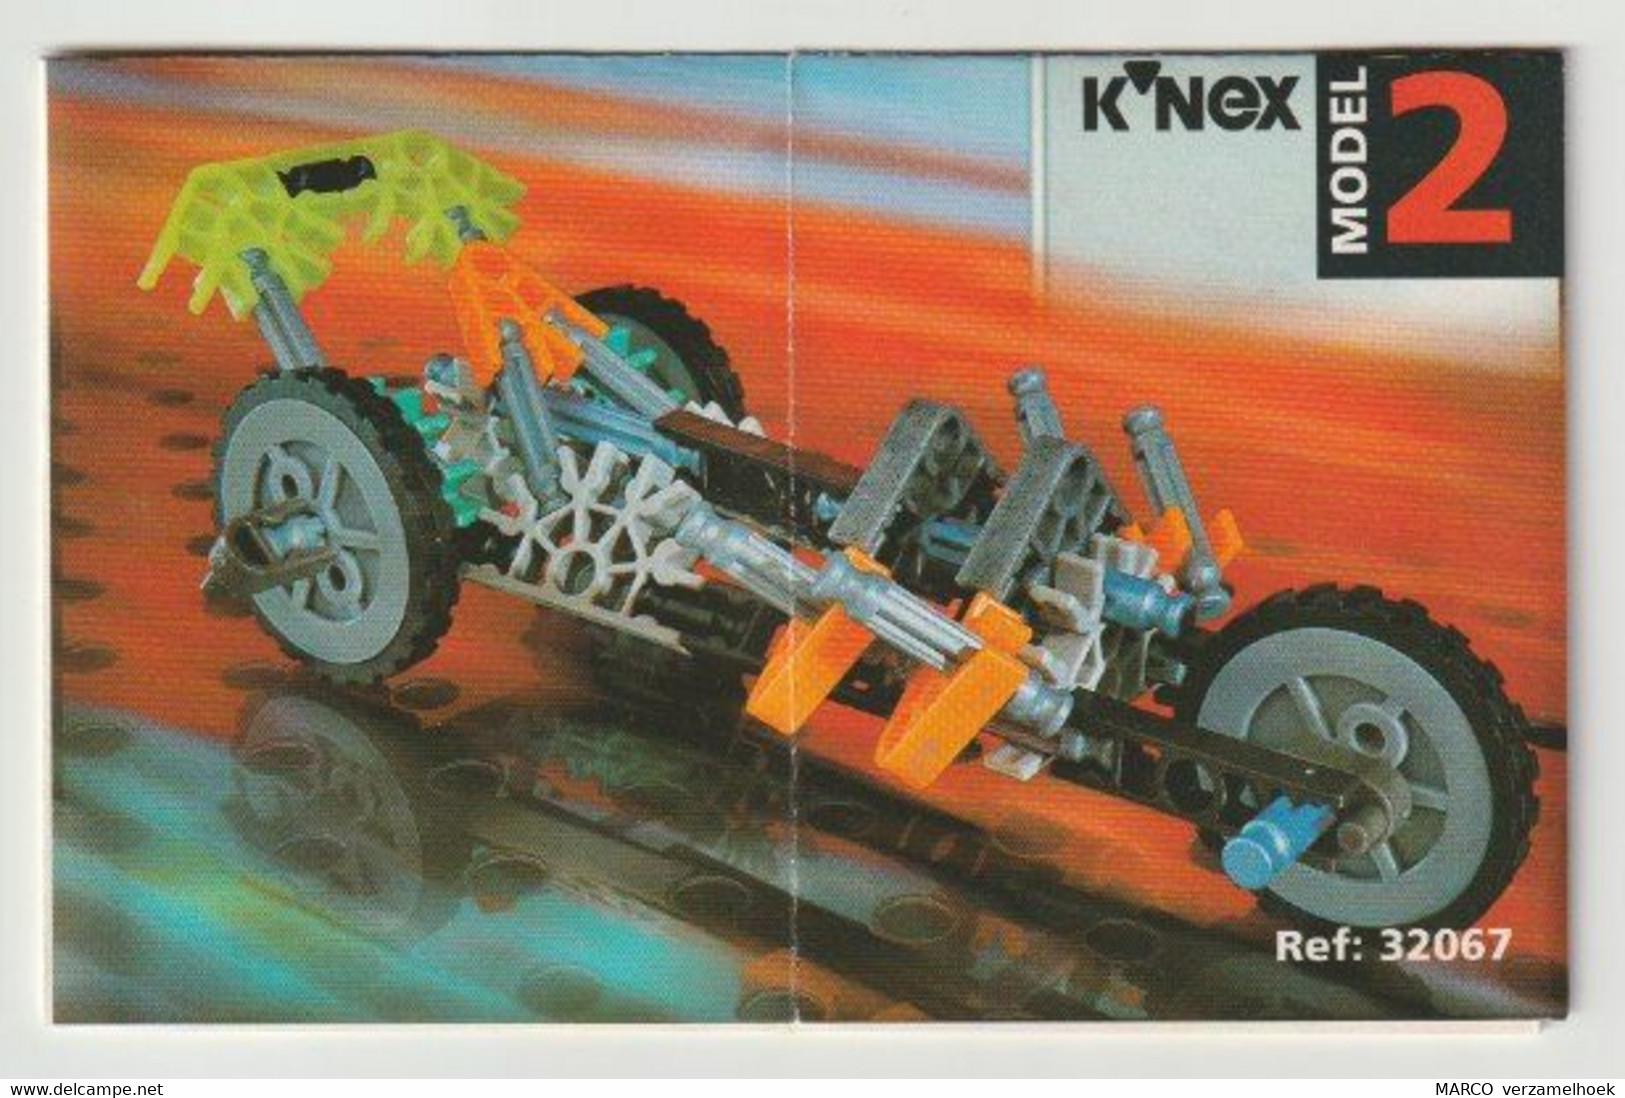 K'NEX Brochure-leaflet Creative Construction 32067 Model 2 - K'nex